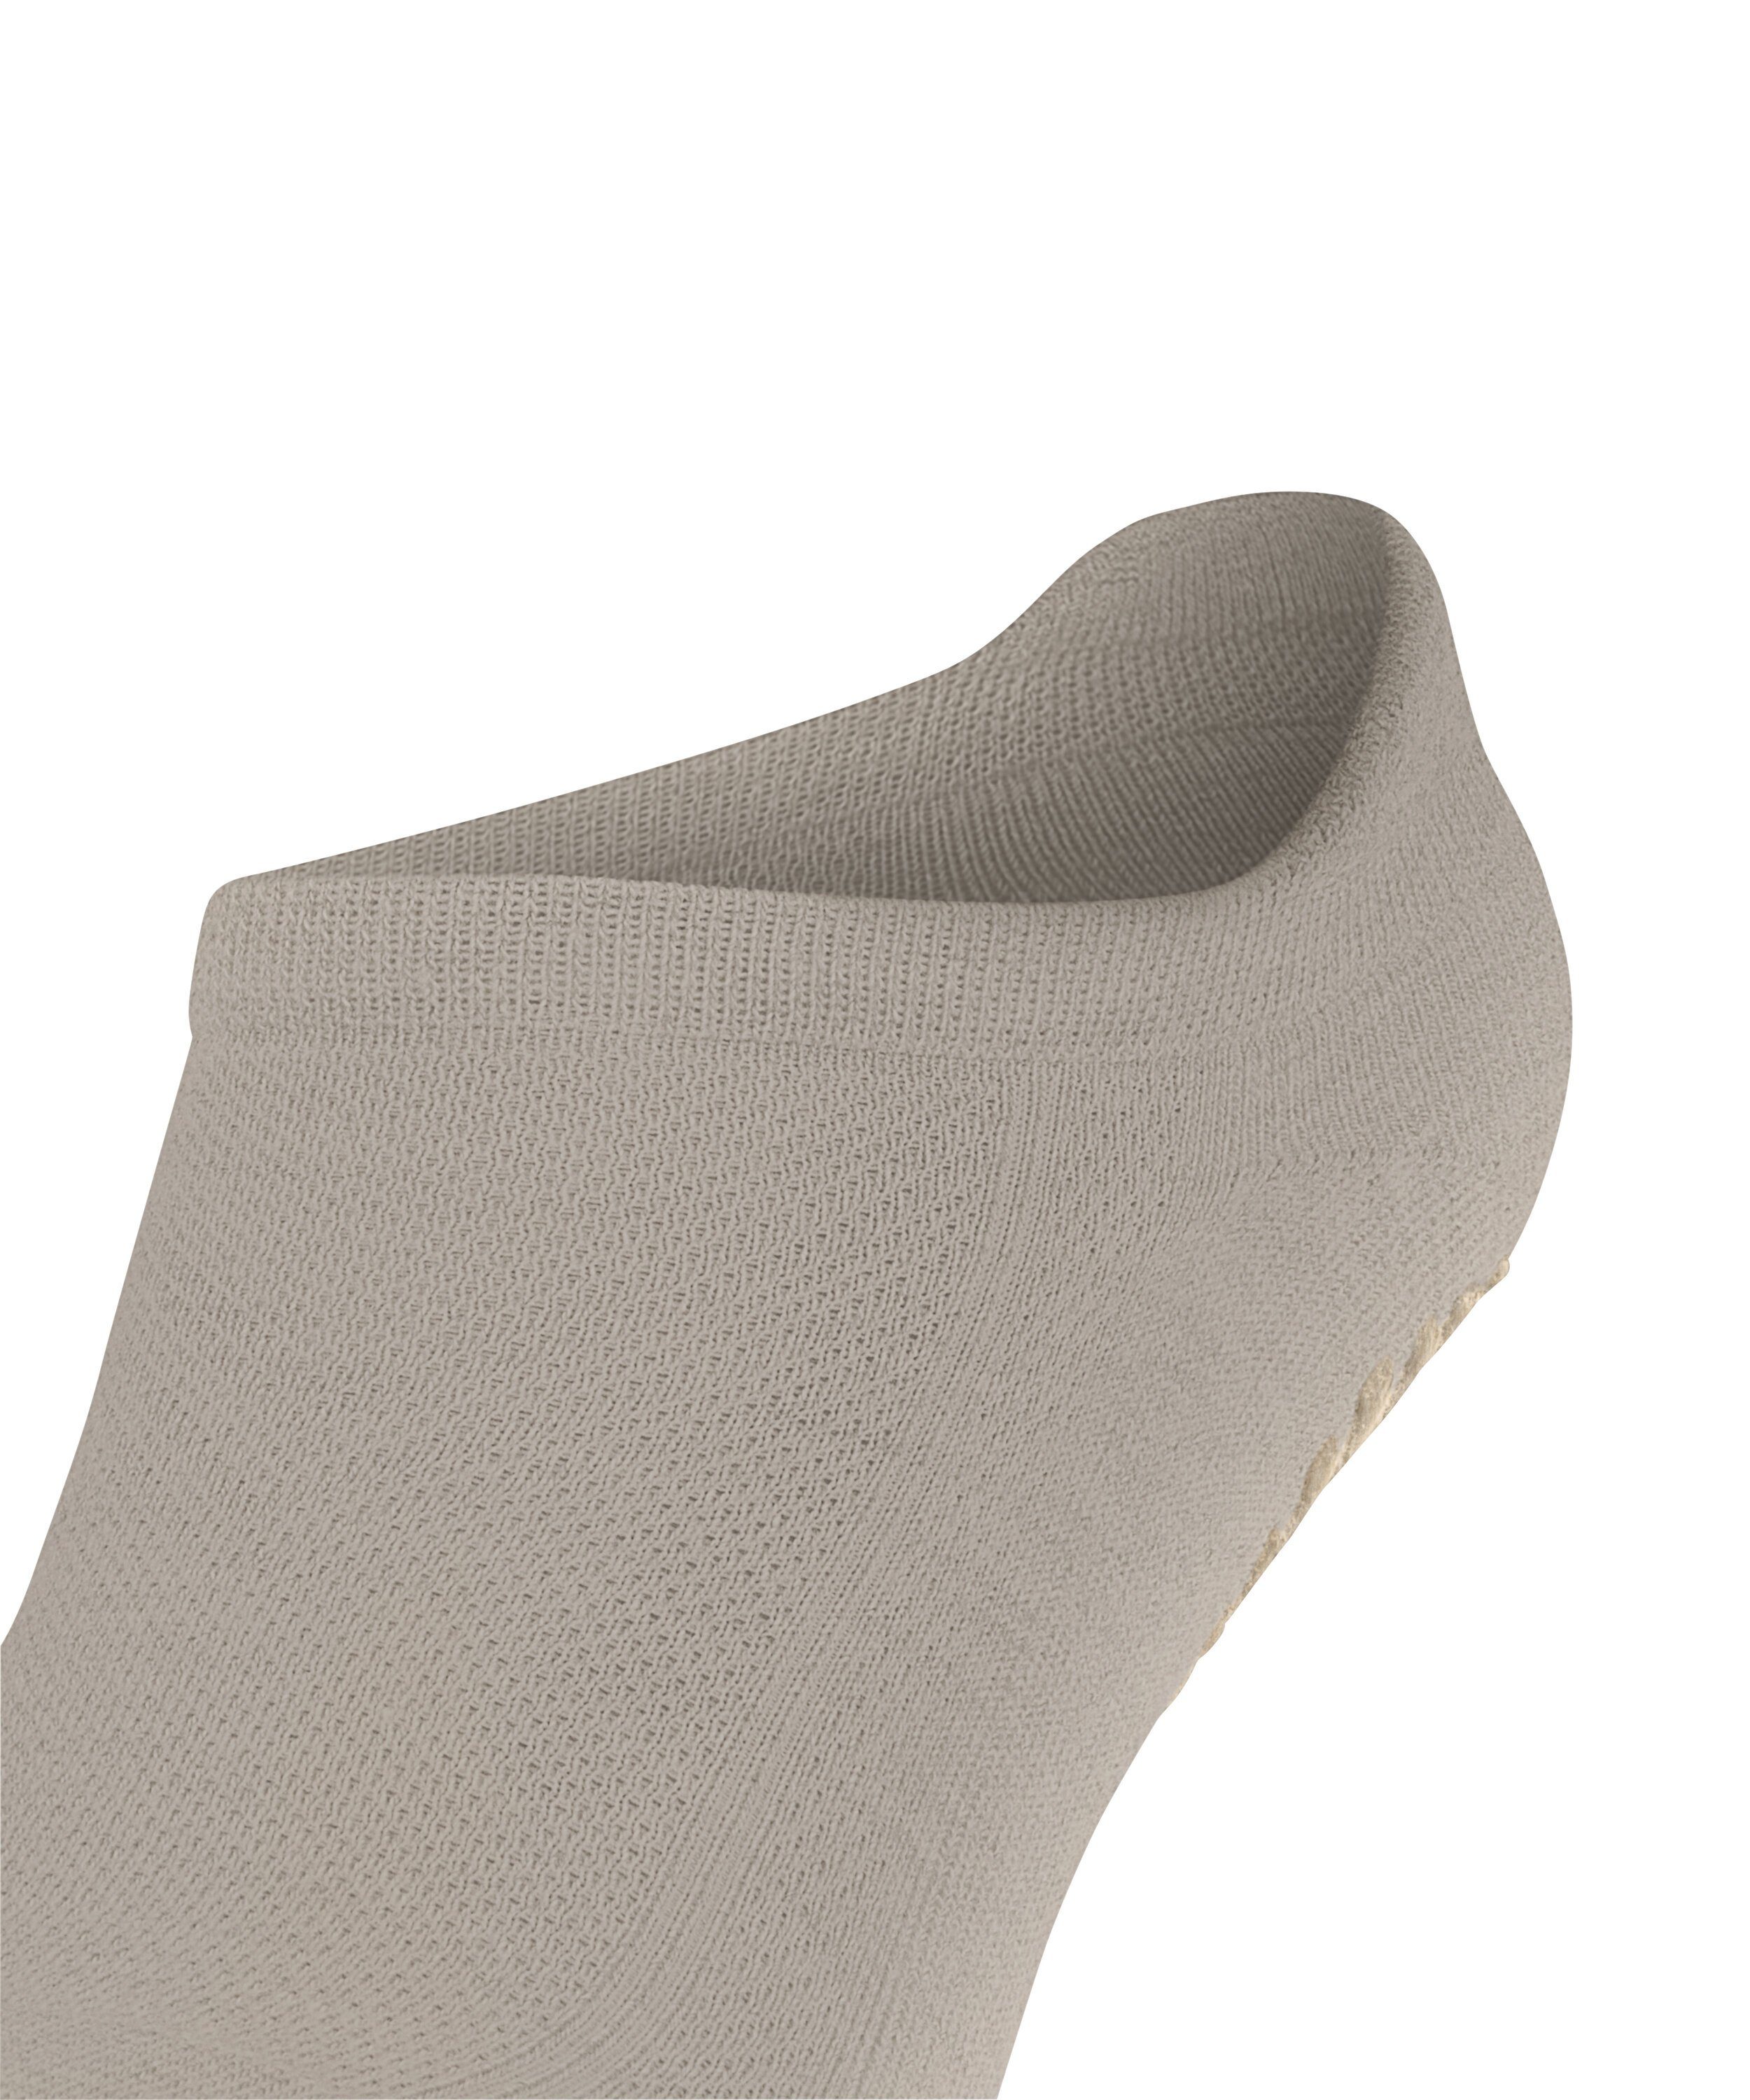 FALKE Sneakersocken Cool Kick rutschhemmendem (4775) towel (1-Paar) auf Noppendruck Sohle mit der